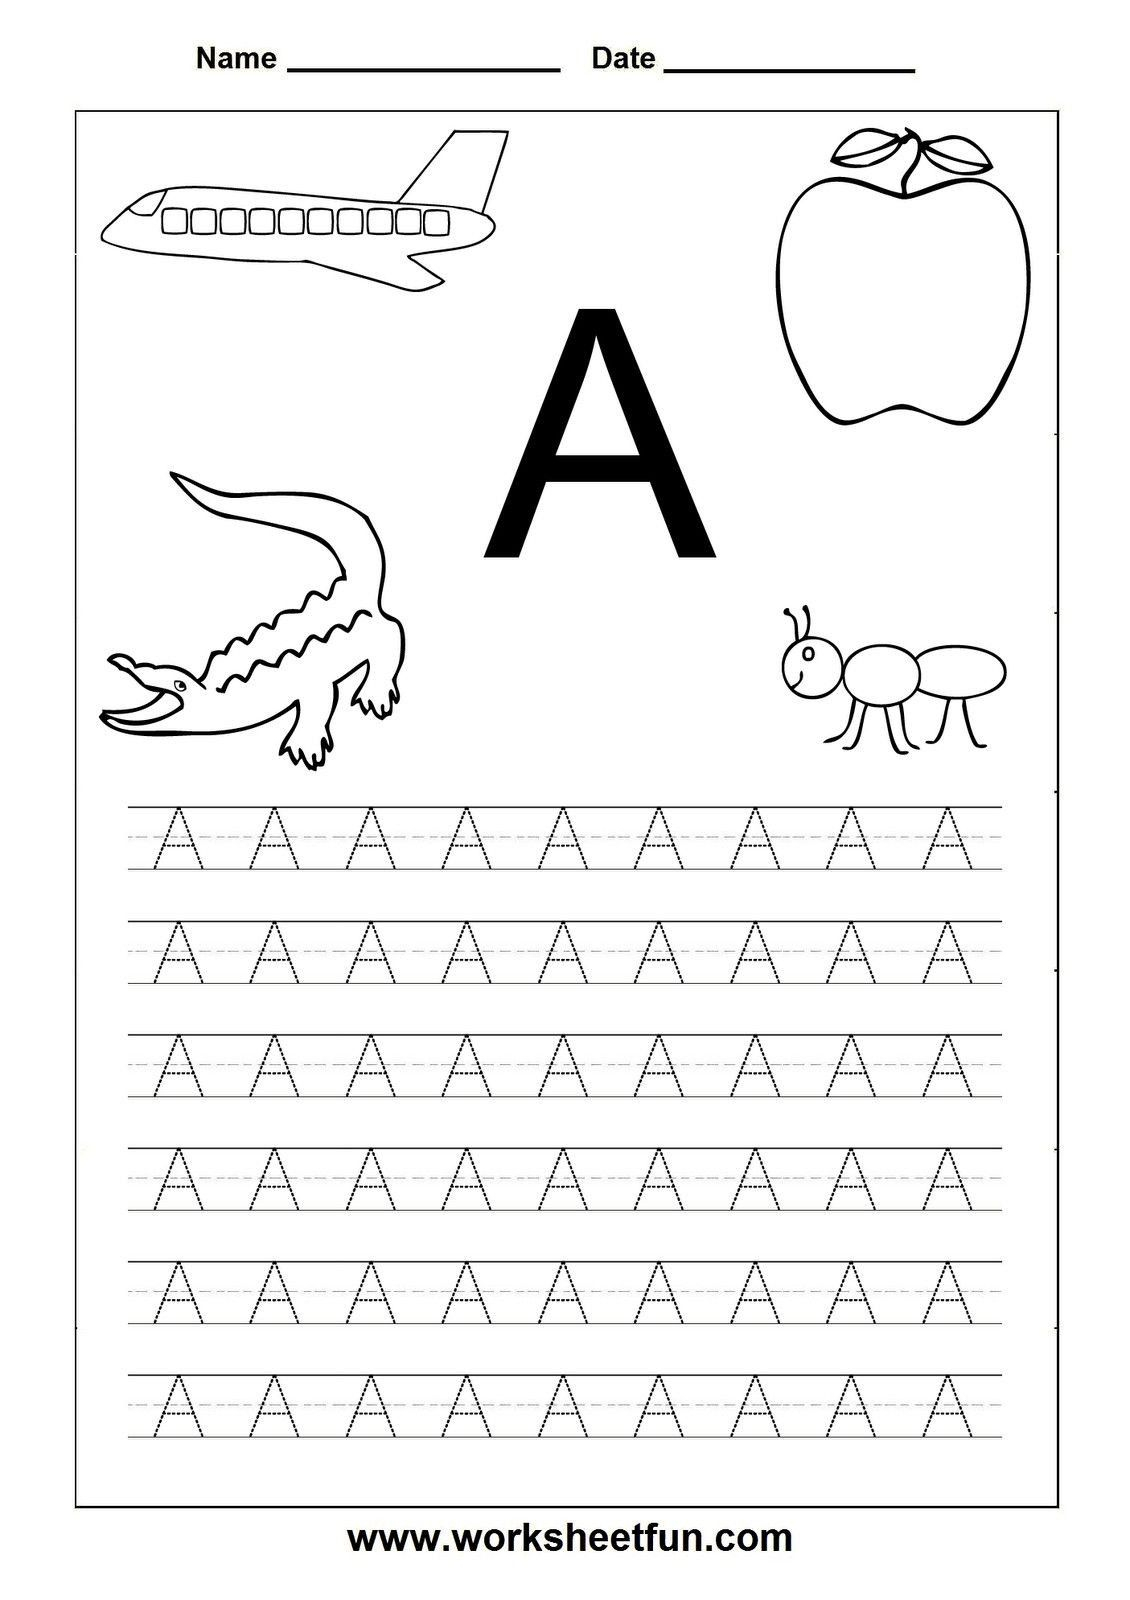 3 Alphabet Worksheets Preschool Free Printable Letters In intended for Alphabet A Worksheets For Preschool